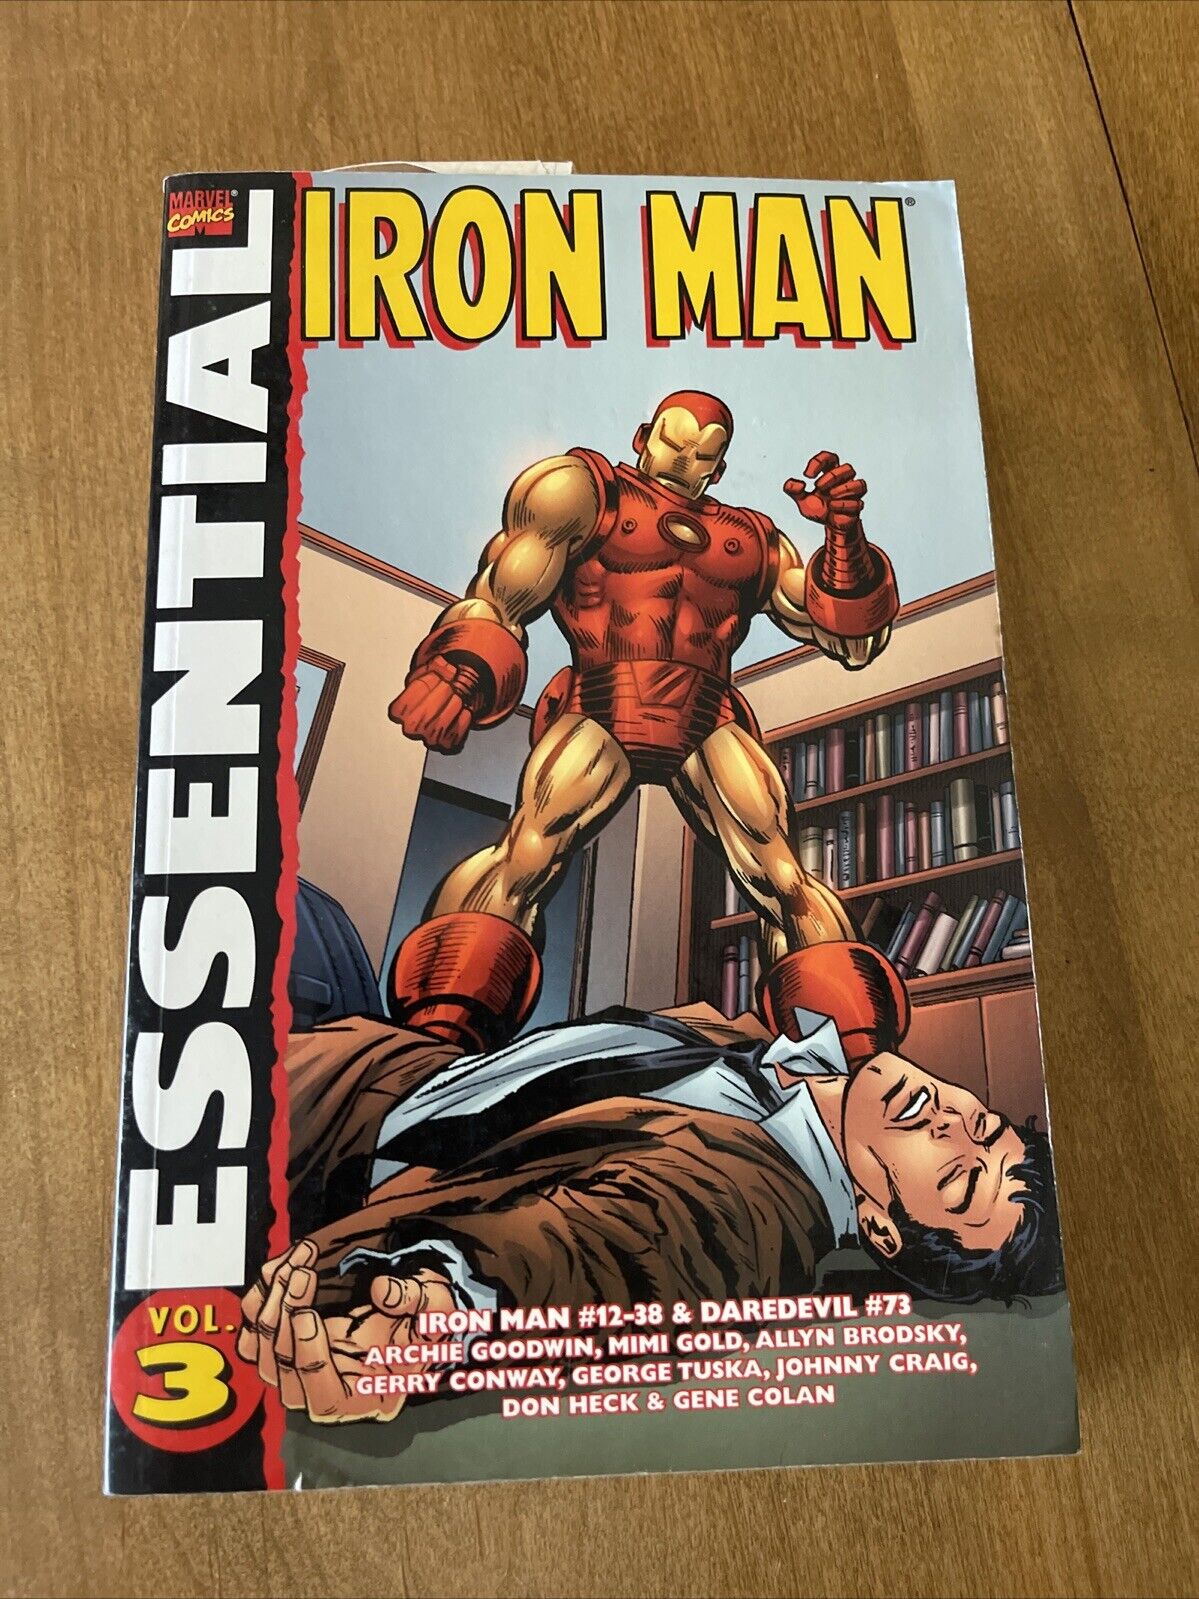 Essential Iron Man #3 (Marvel Comics April 2008)